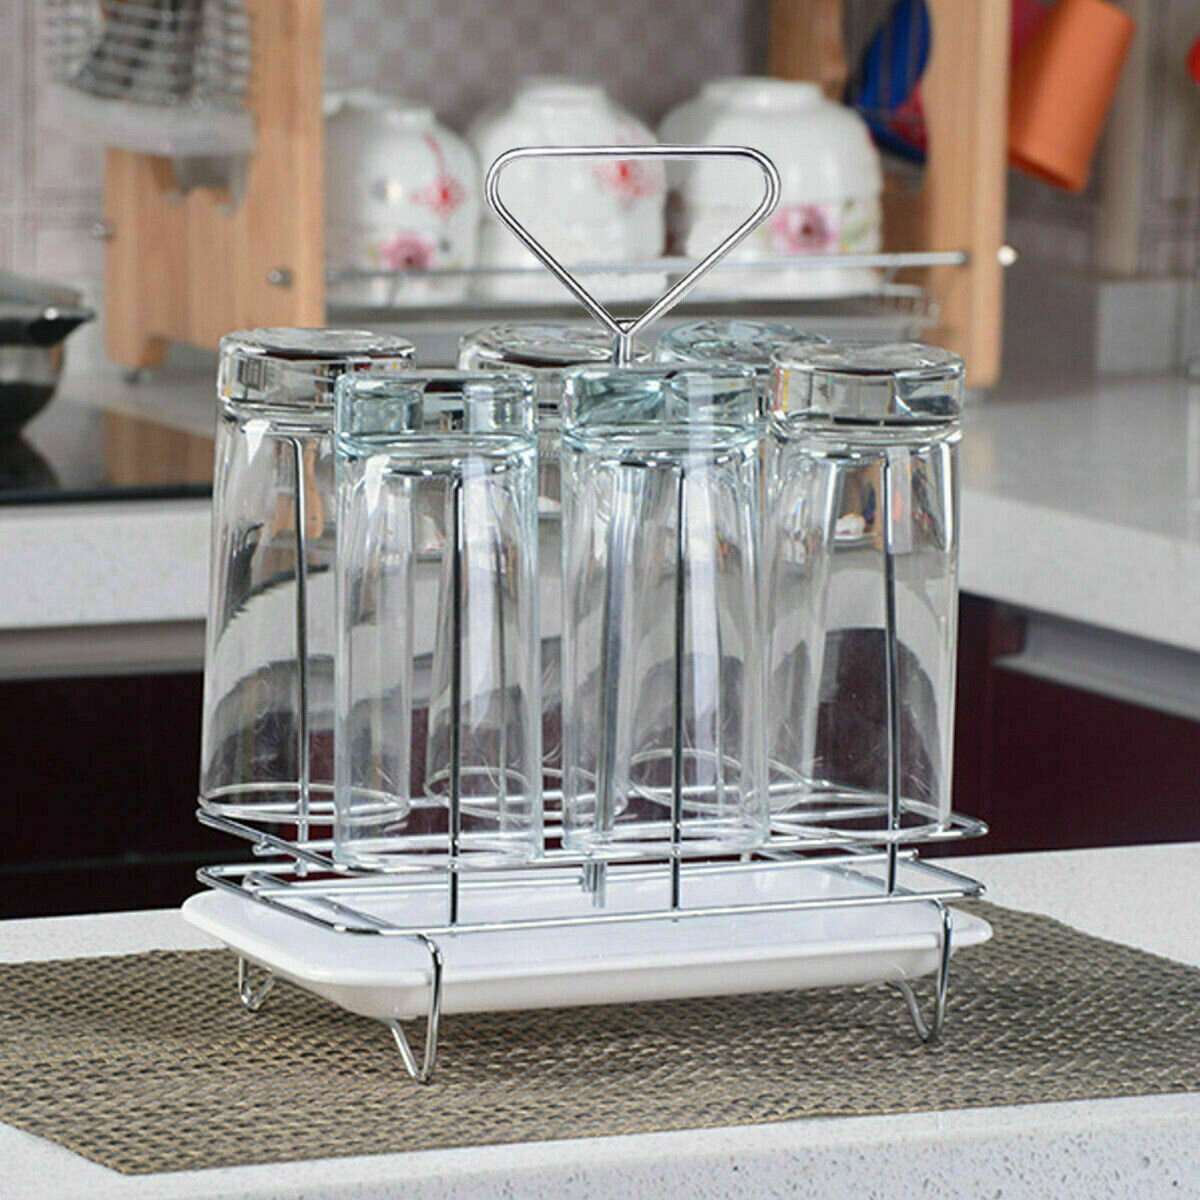 Kitchen Glass Cup Rack Water Mug Draining Drying Organizer Drain Holder Stand 